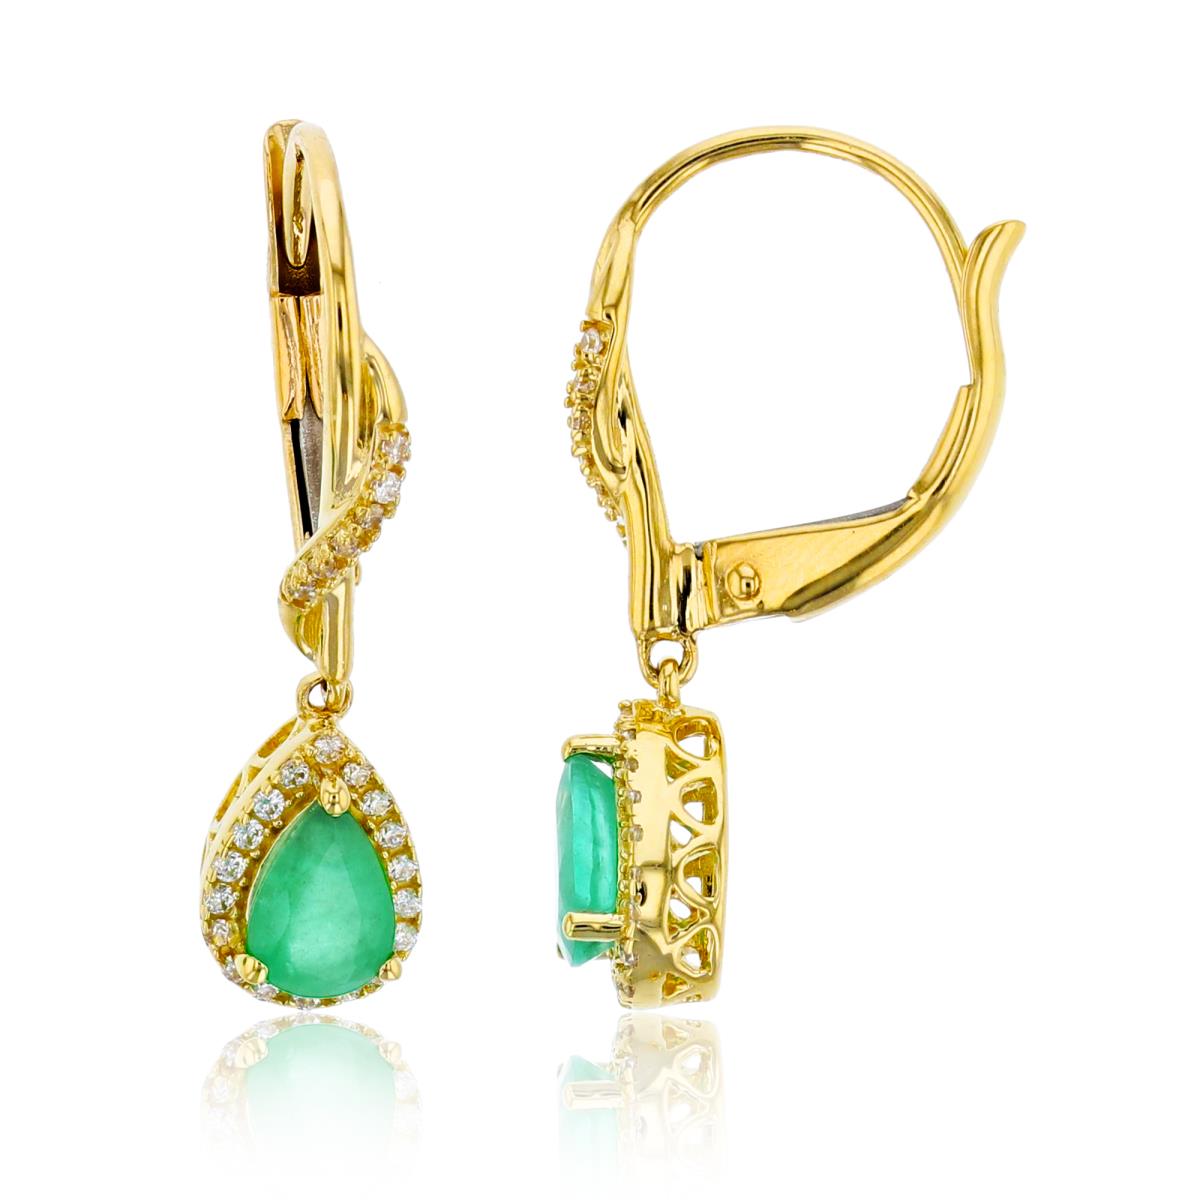 14K Yellow Gold 0.17cttw Rnd Diamonds & 6x4mm PS Emerald Halo Dangling Pear-shape Earrings